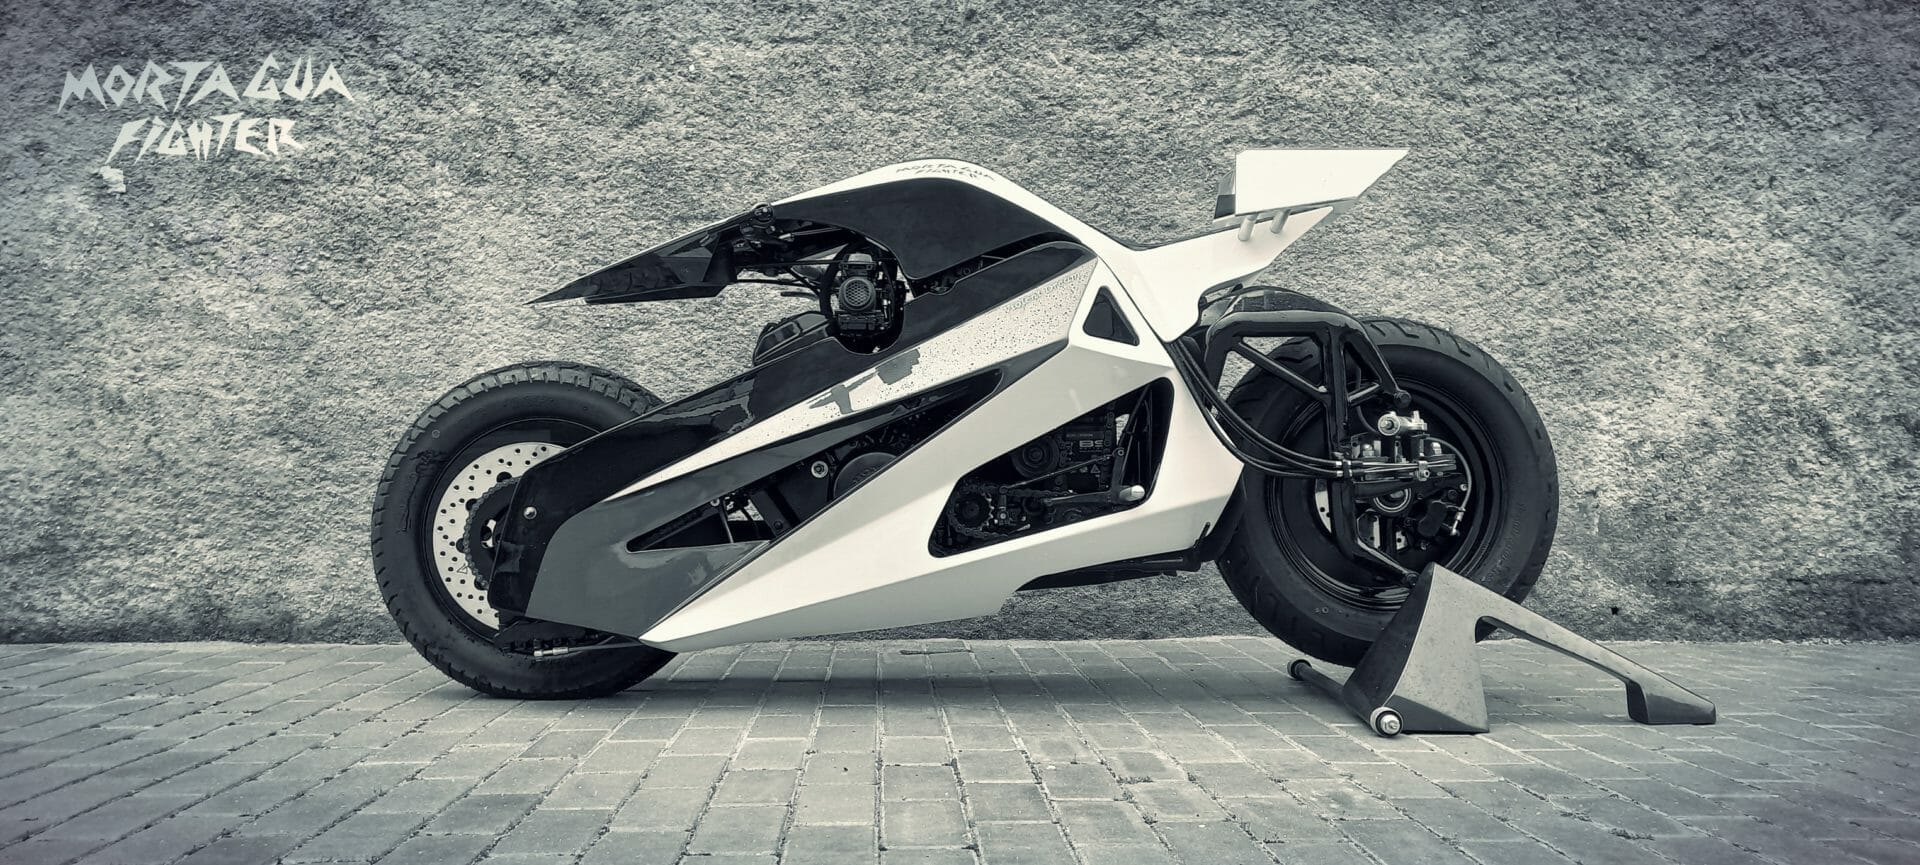 Custombike extrem – Mortagua Fighter 10 - MOTORCYCLES.NEWS via @motorradnachrichten